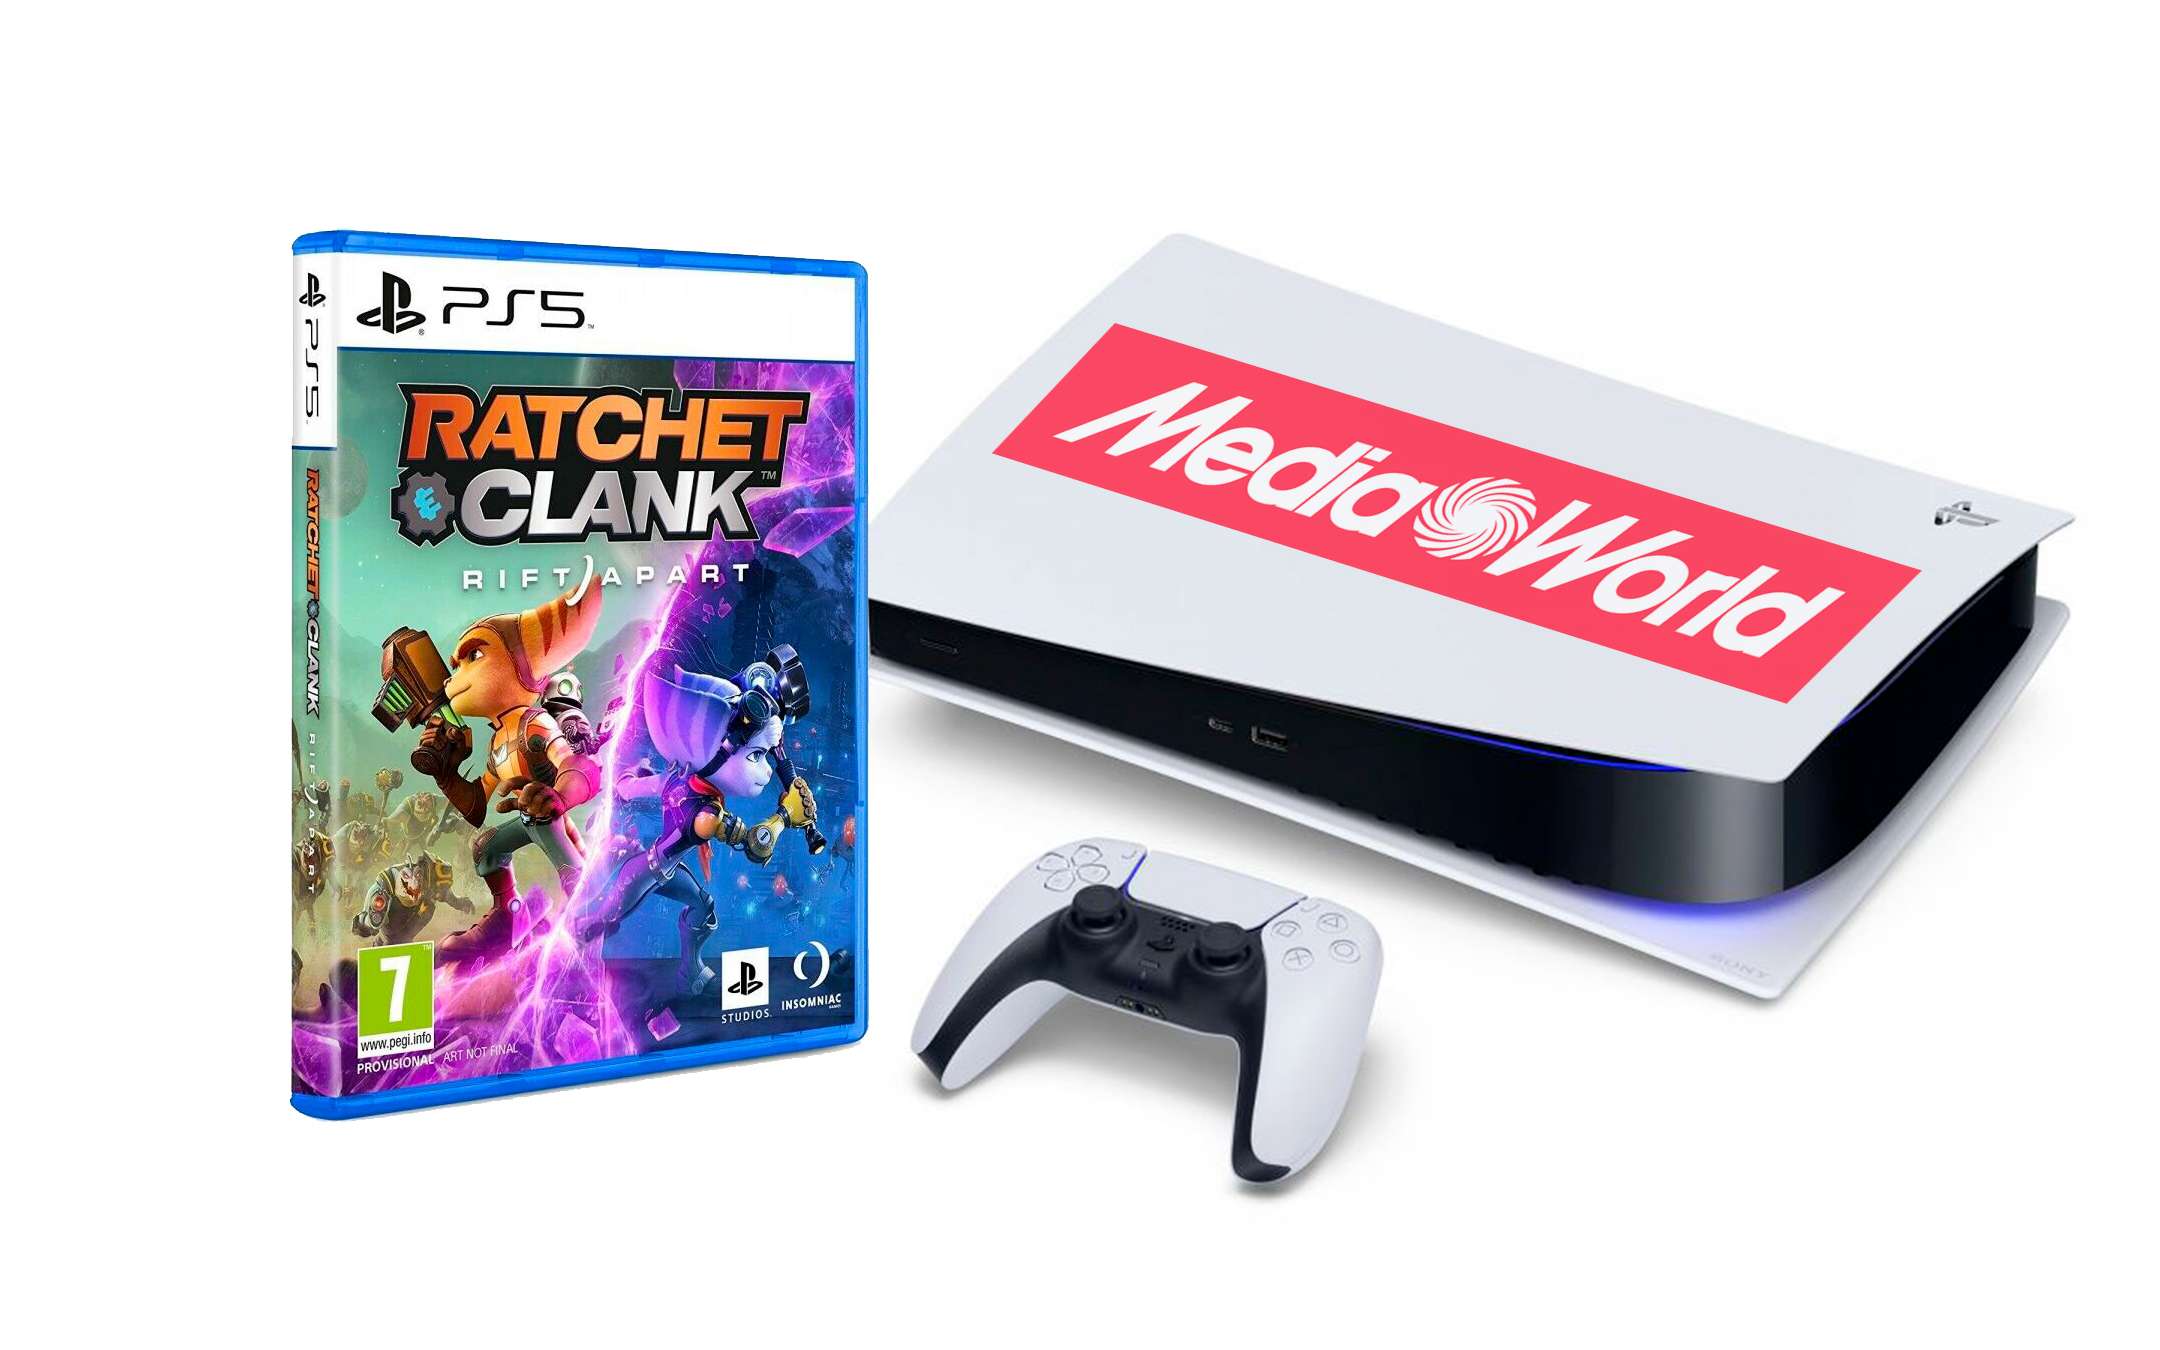 PS5 + Ratchet & Clank : disponibile alle 15:00 sul sito MediaWorld [LINK]